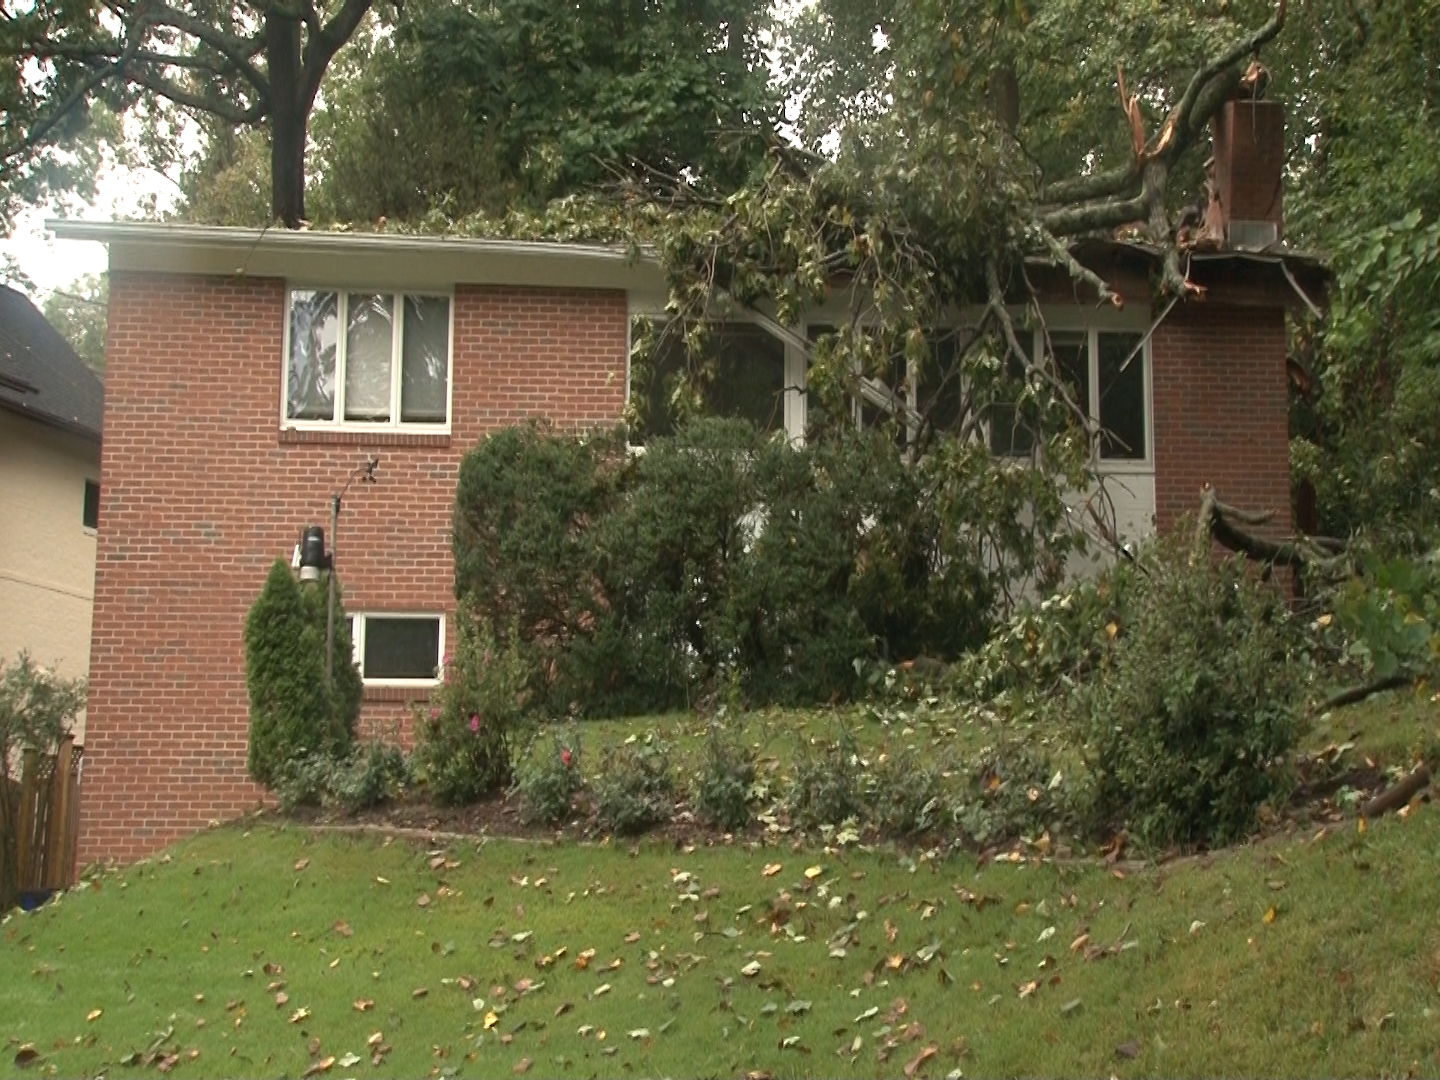 Fallen tree on Bethesda Home